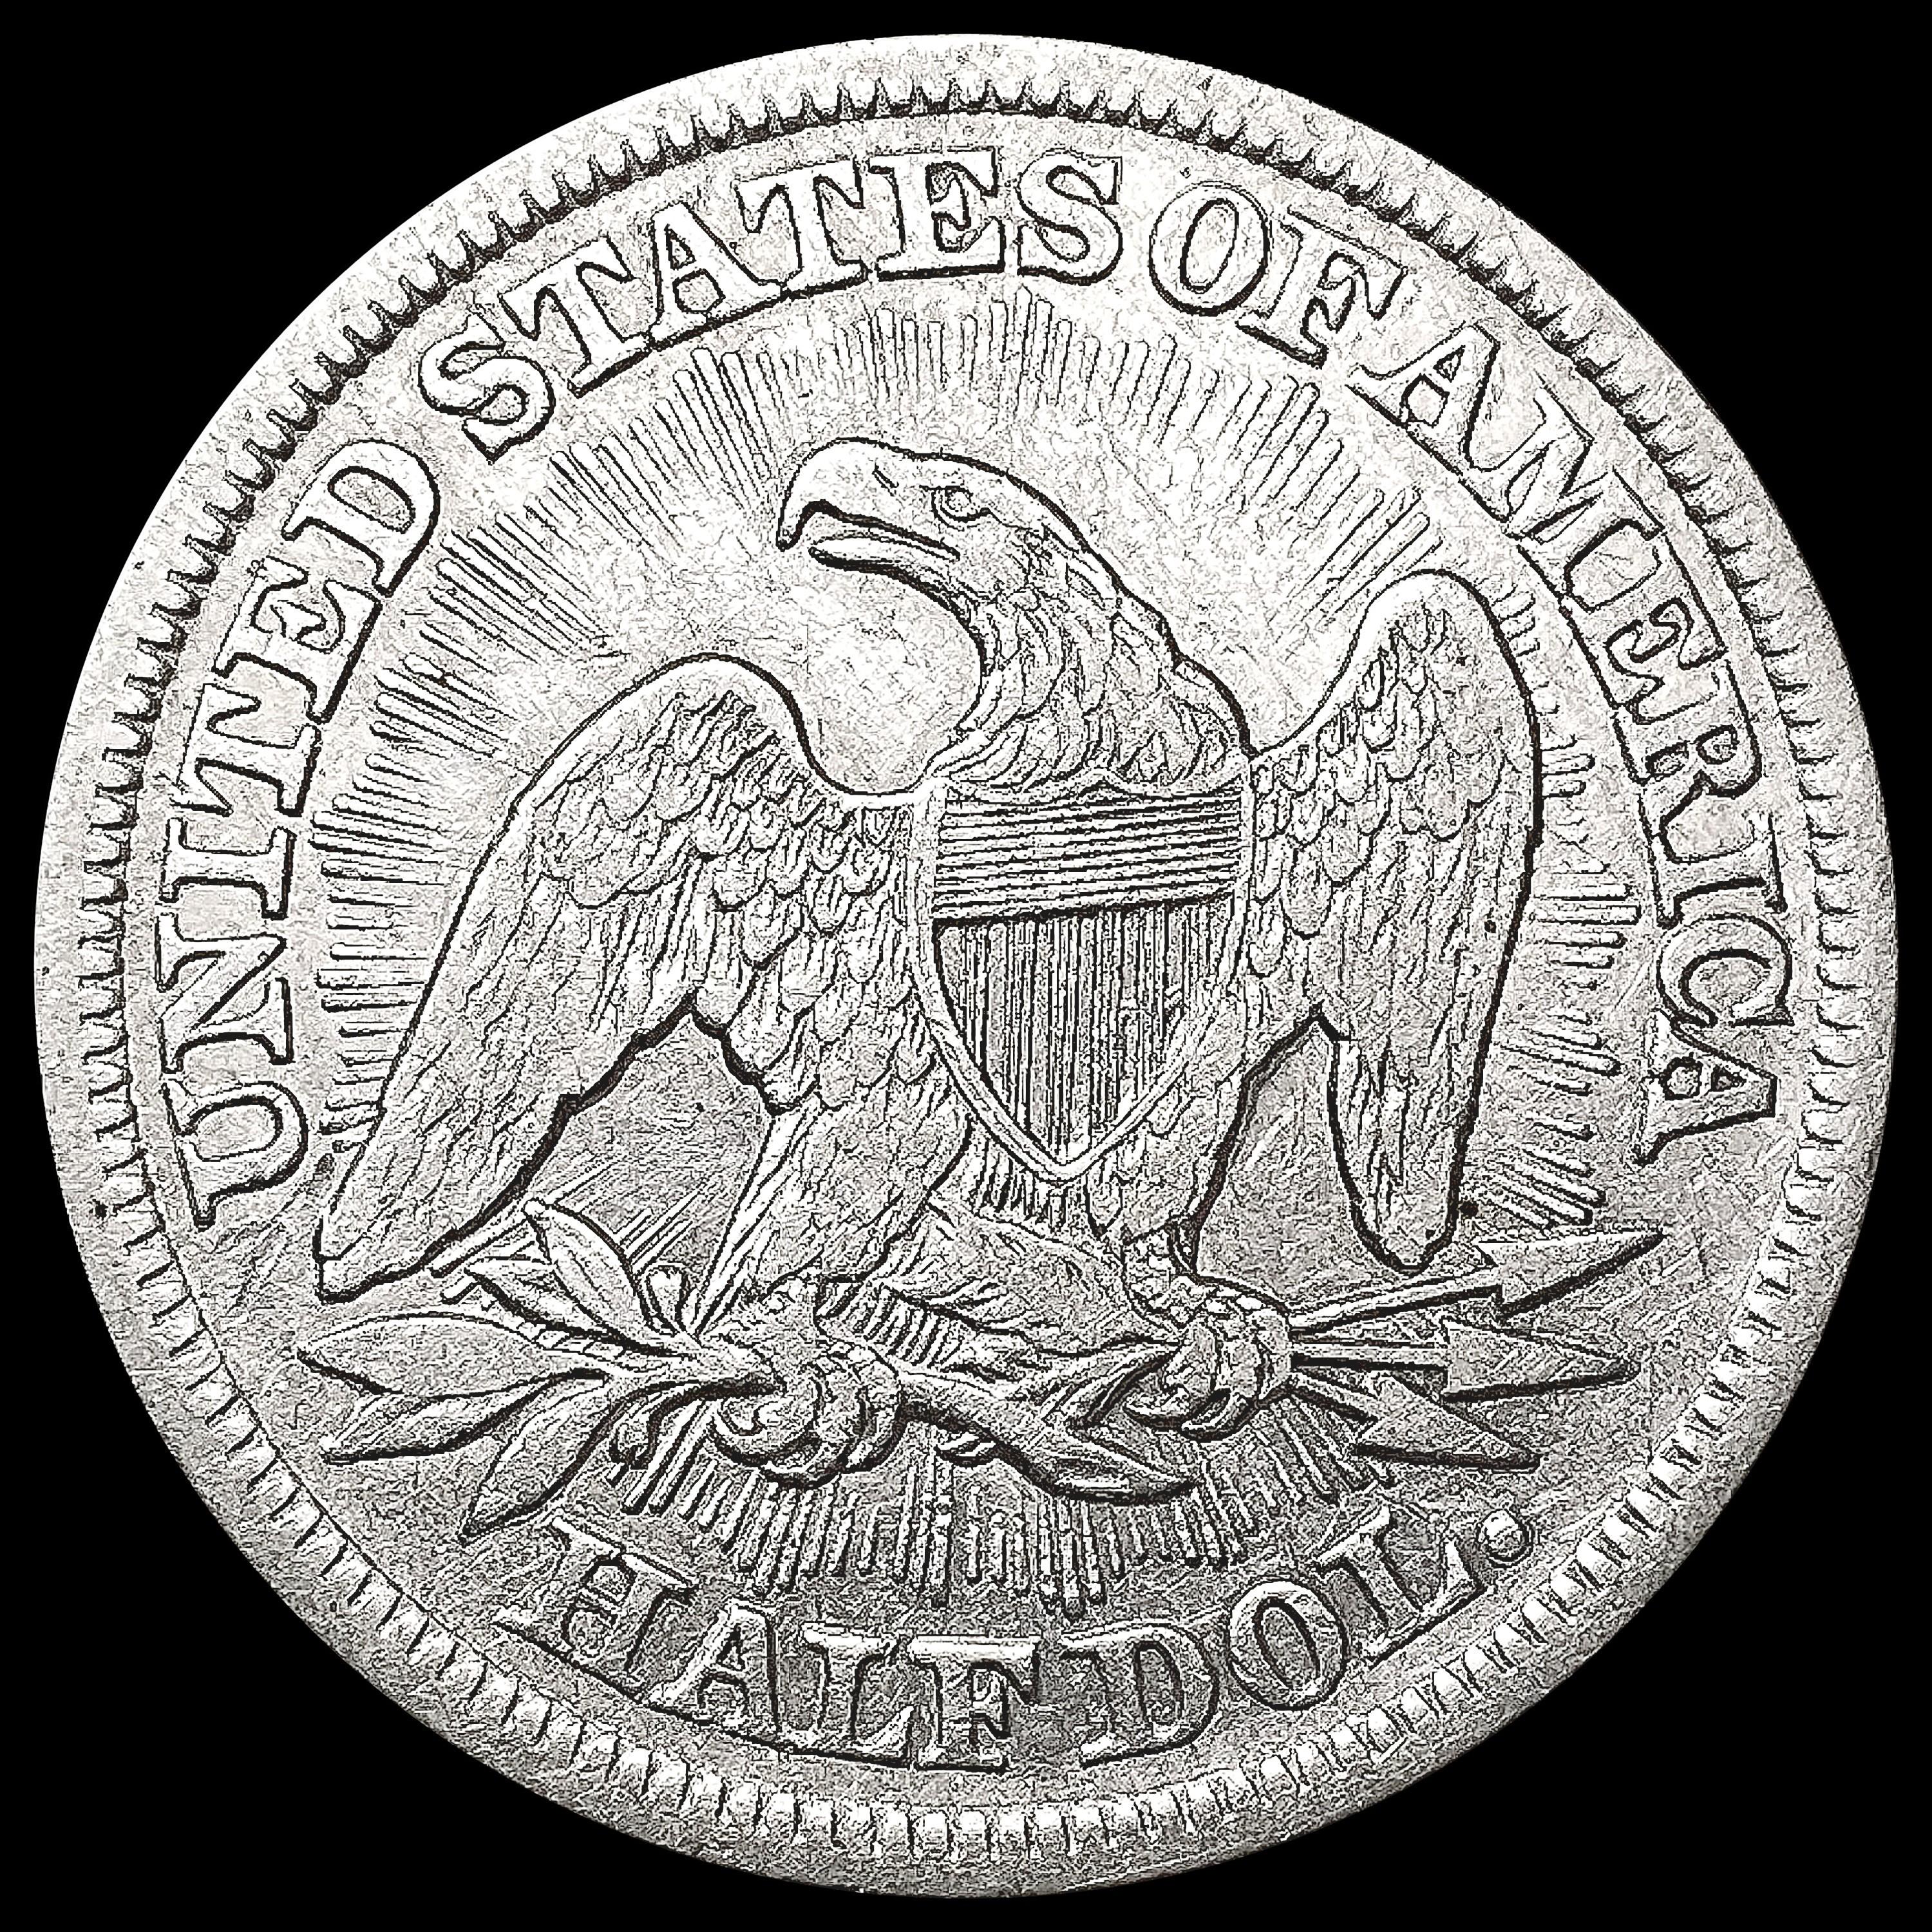 1853 Arws & Rays Seated Liberty Half Dollar NEARLY